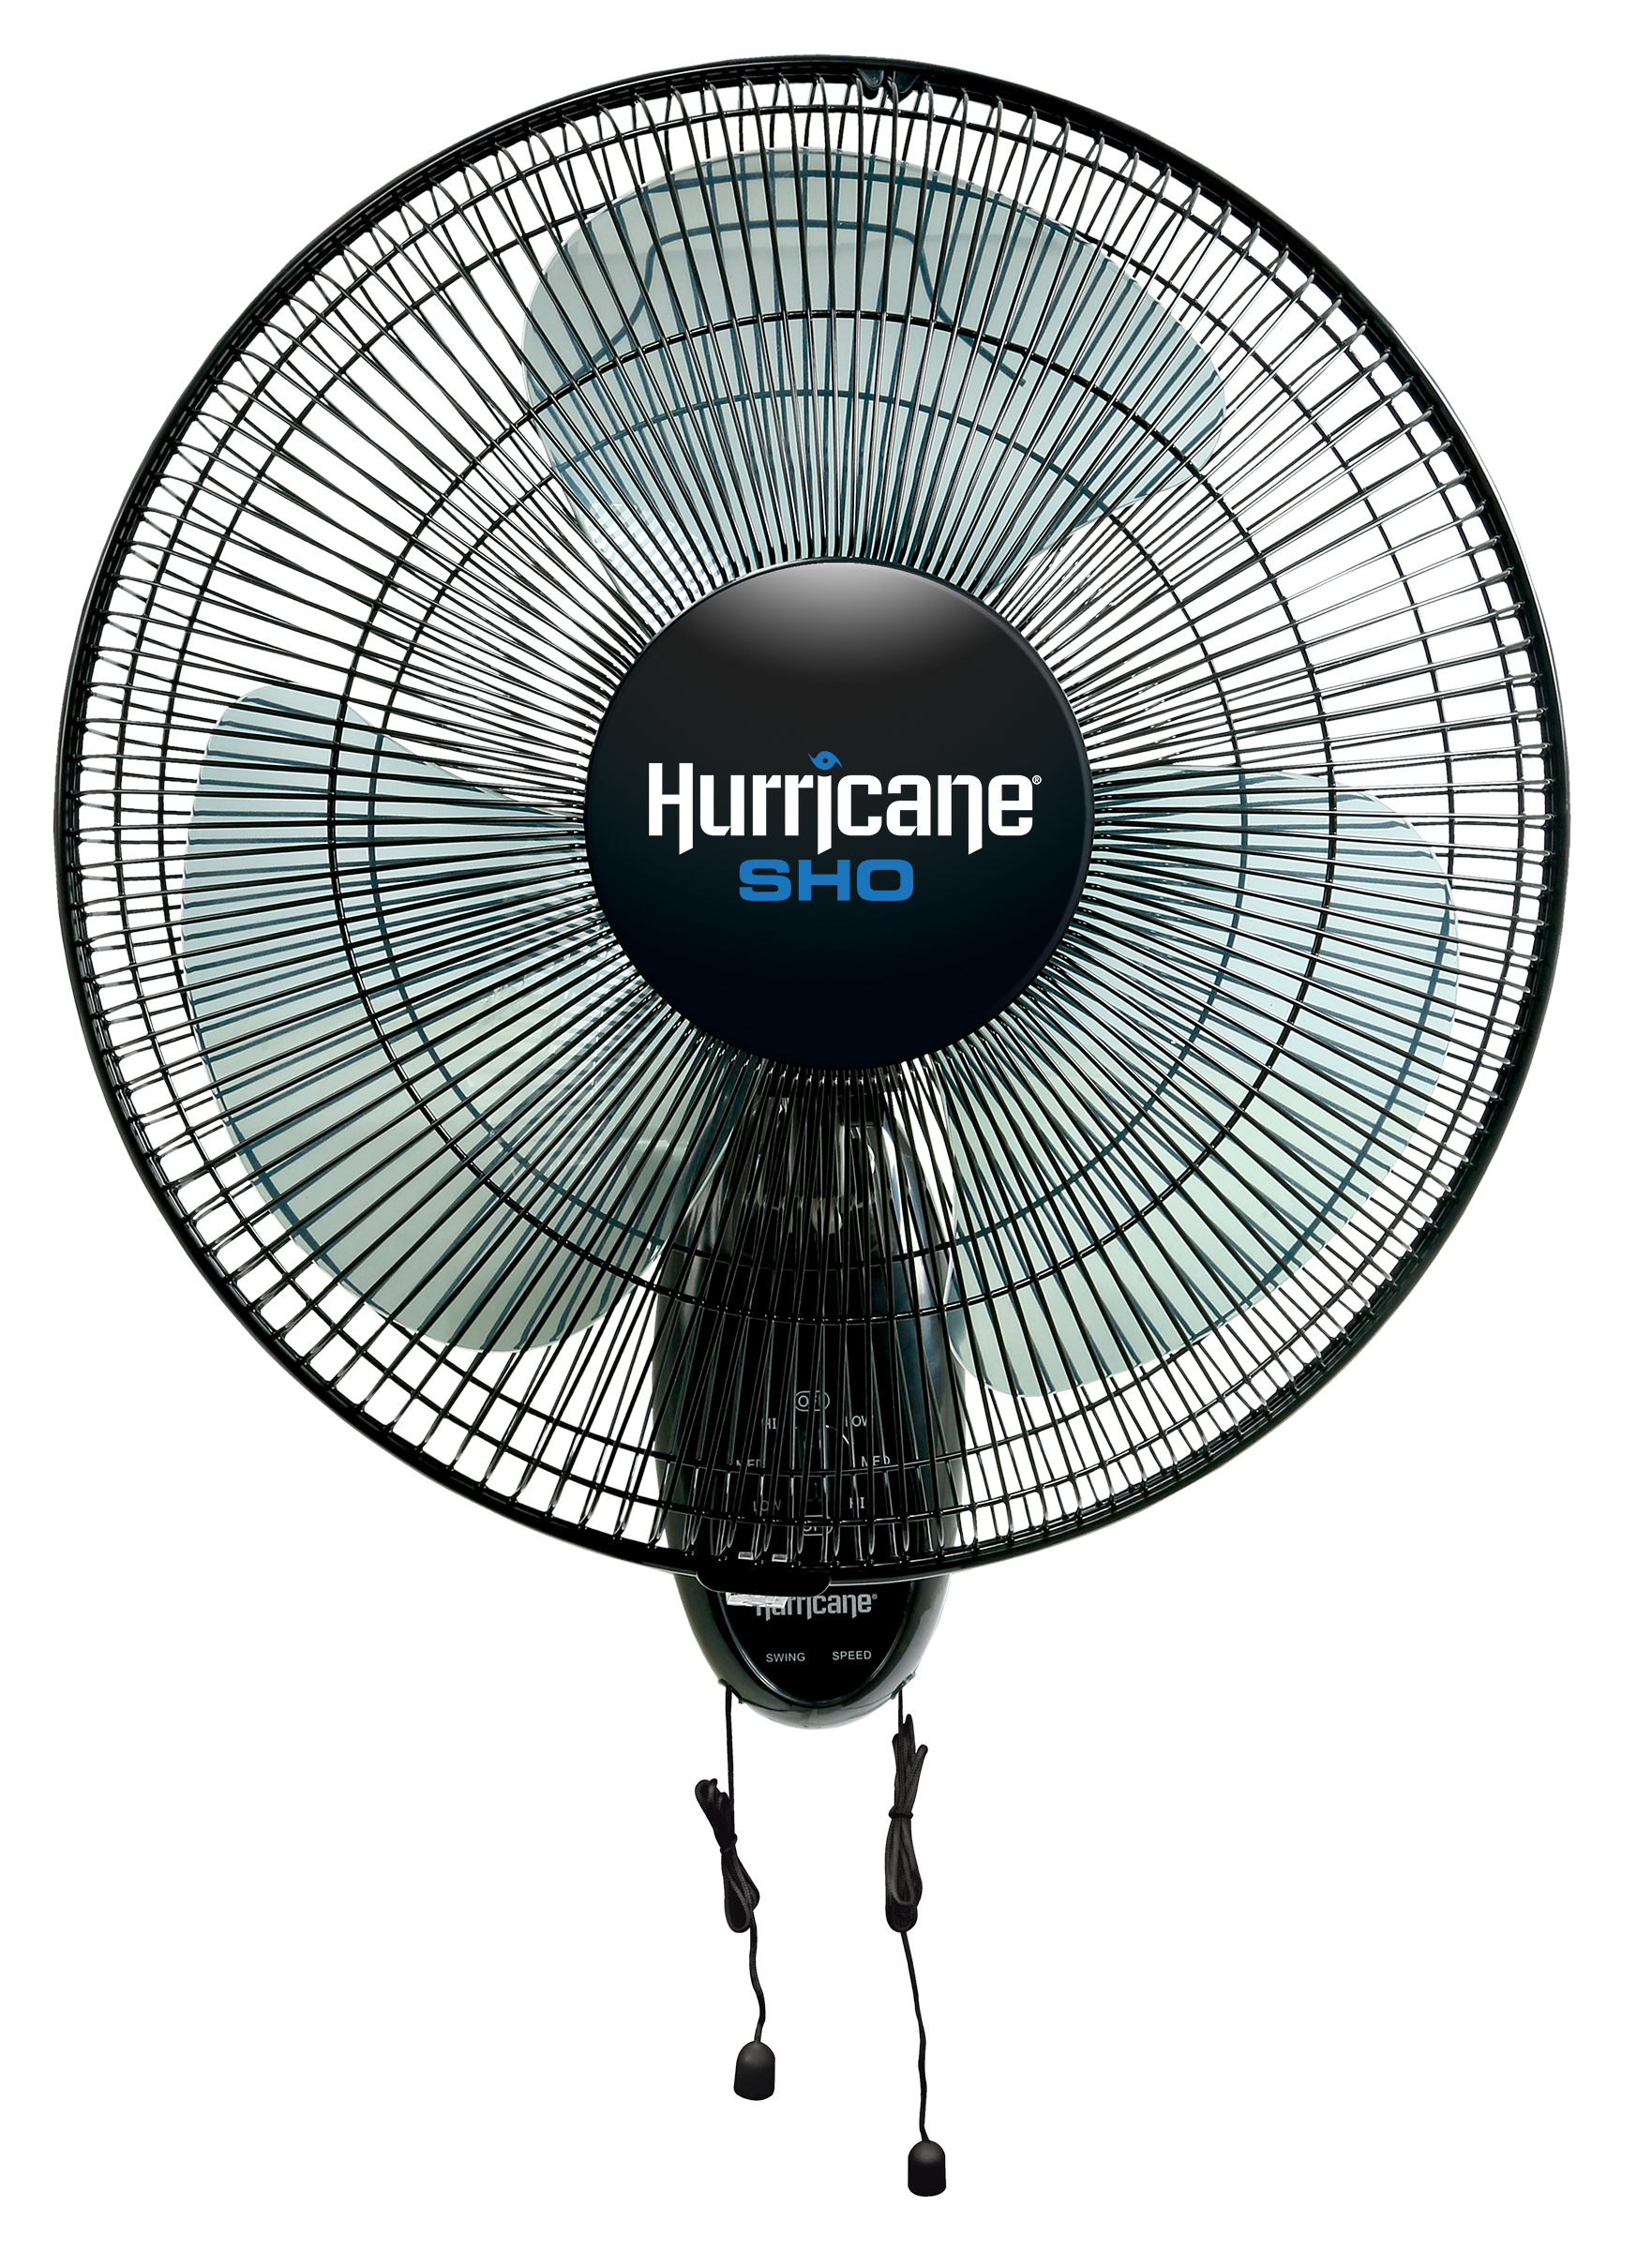 Hurricane Classic Wall Mount Oscillating Fan 16 inch